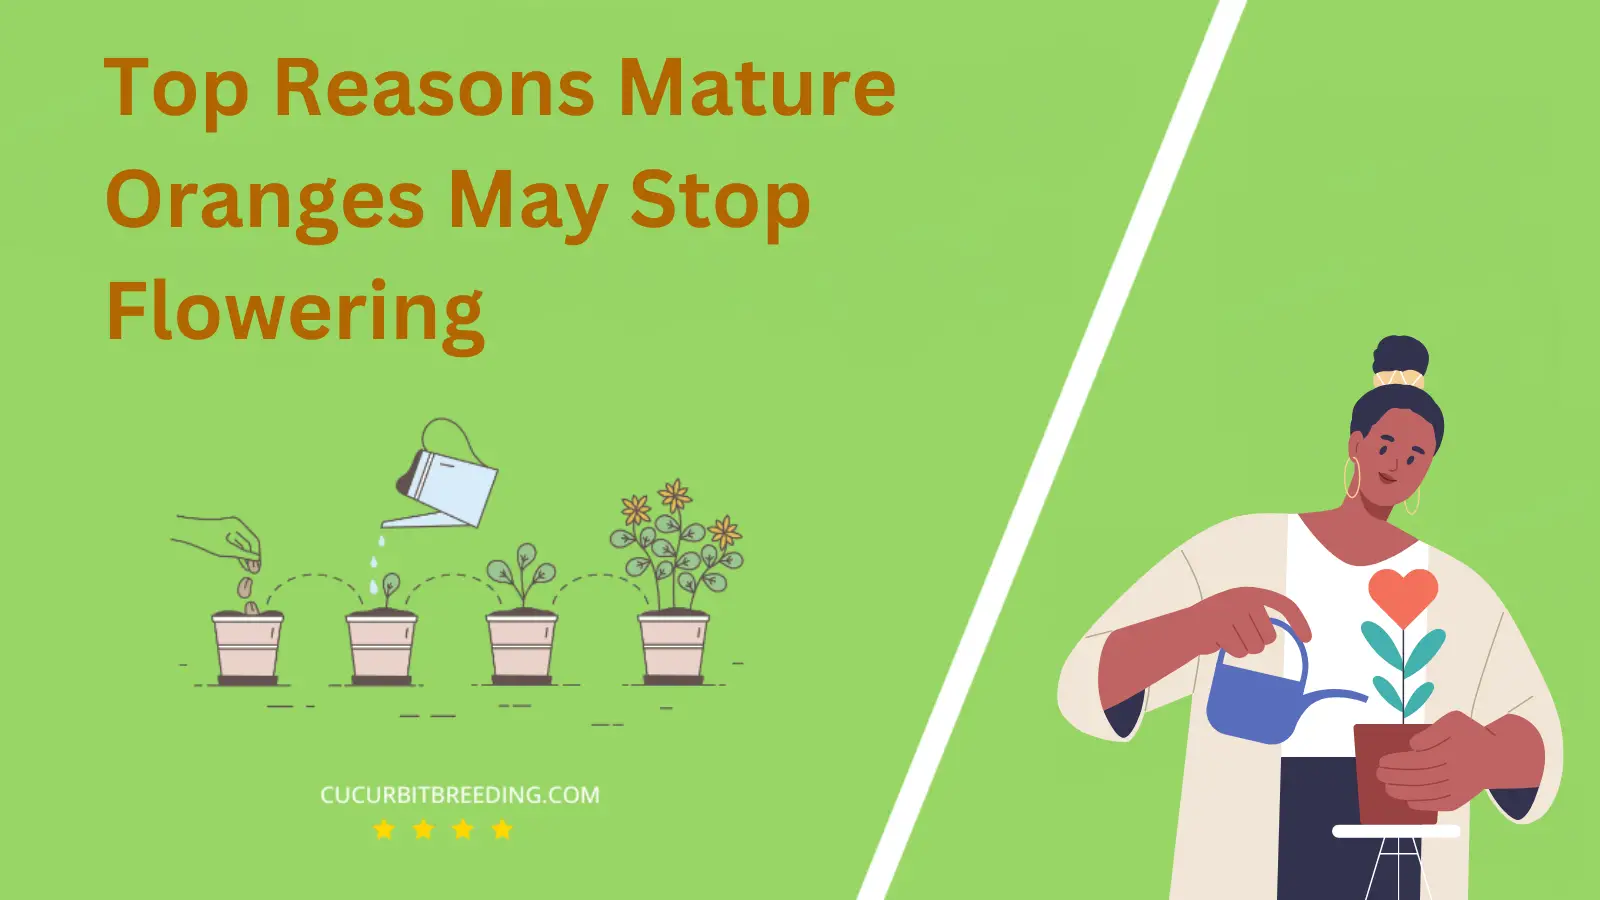 Top Reasons Mature Oranges May Stop Flowering